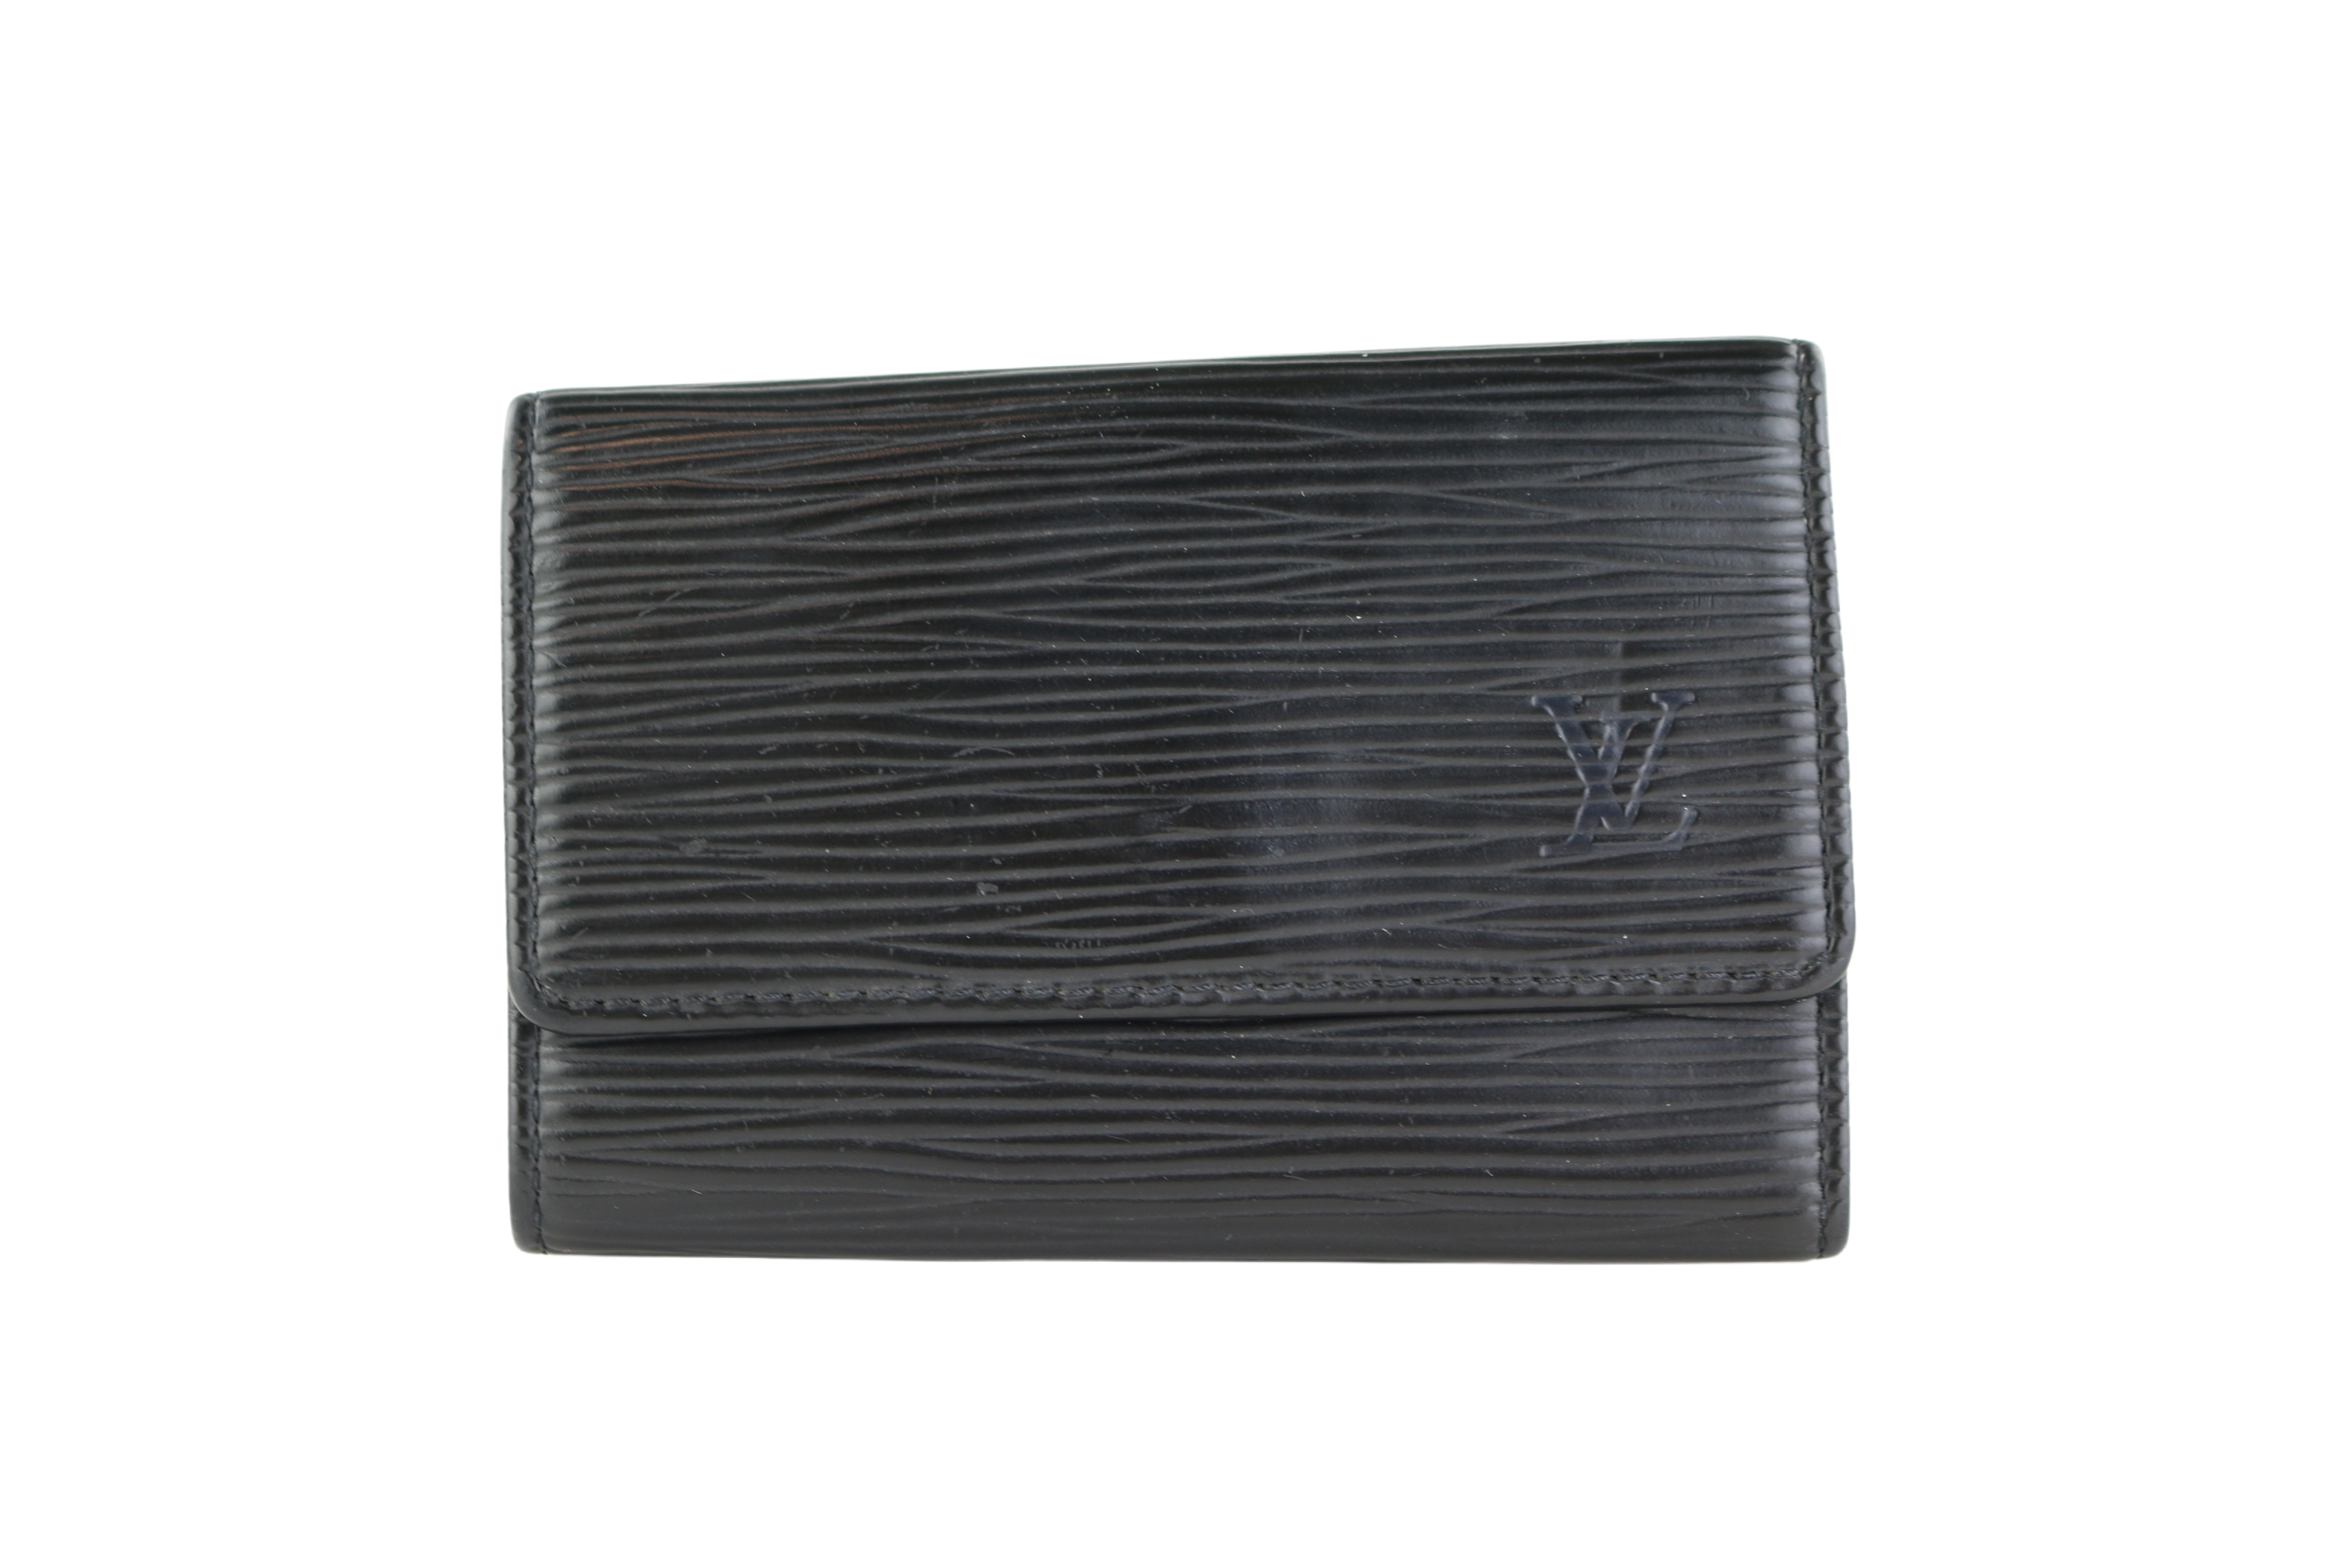 Louis Vuitton Black Epi Leather Key Chain Wallet